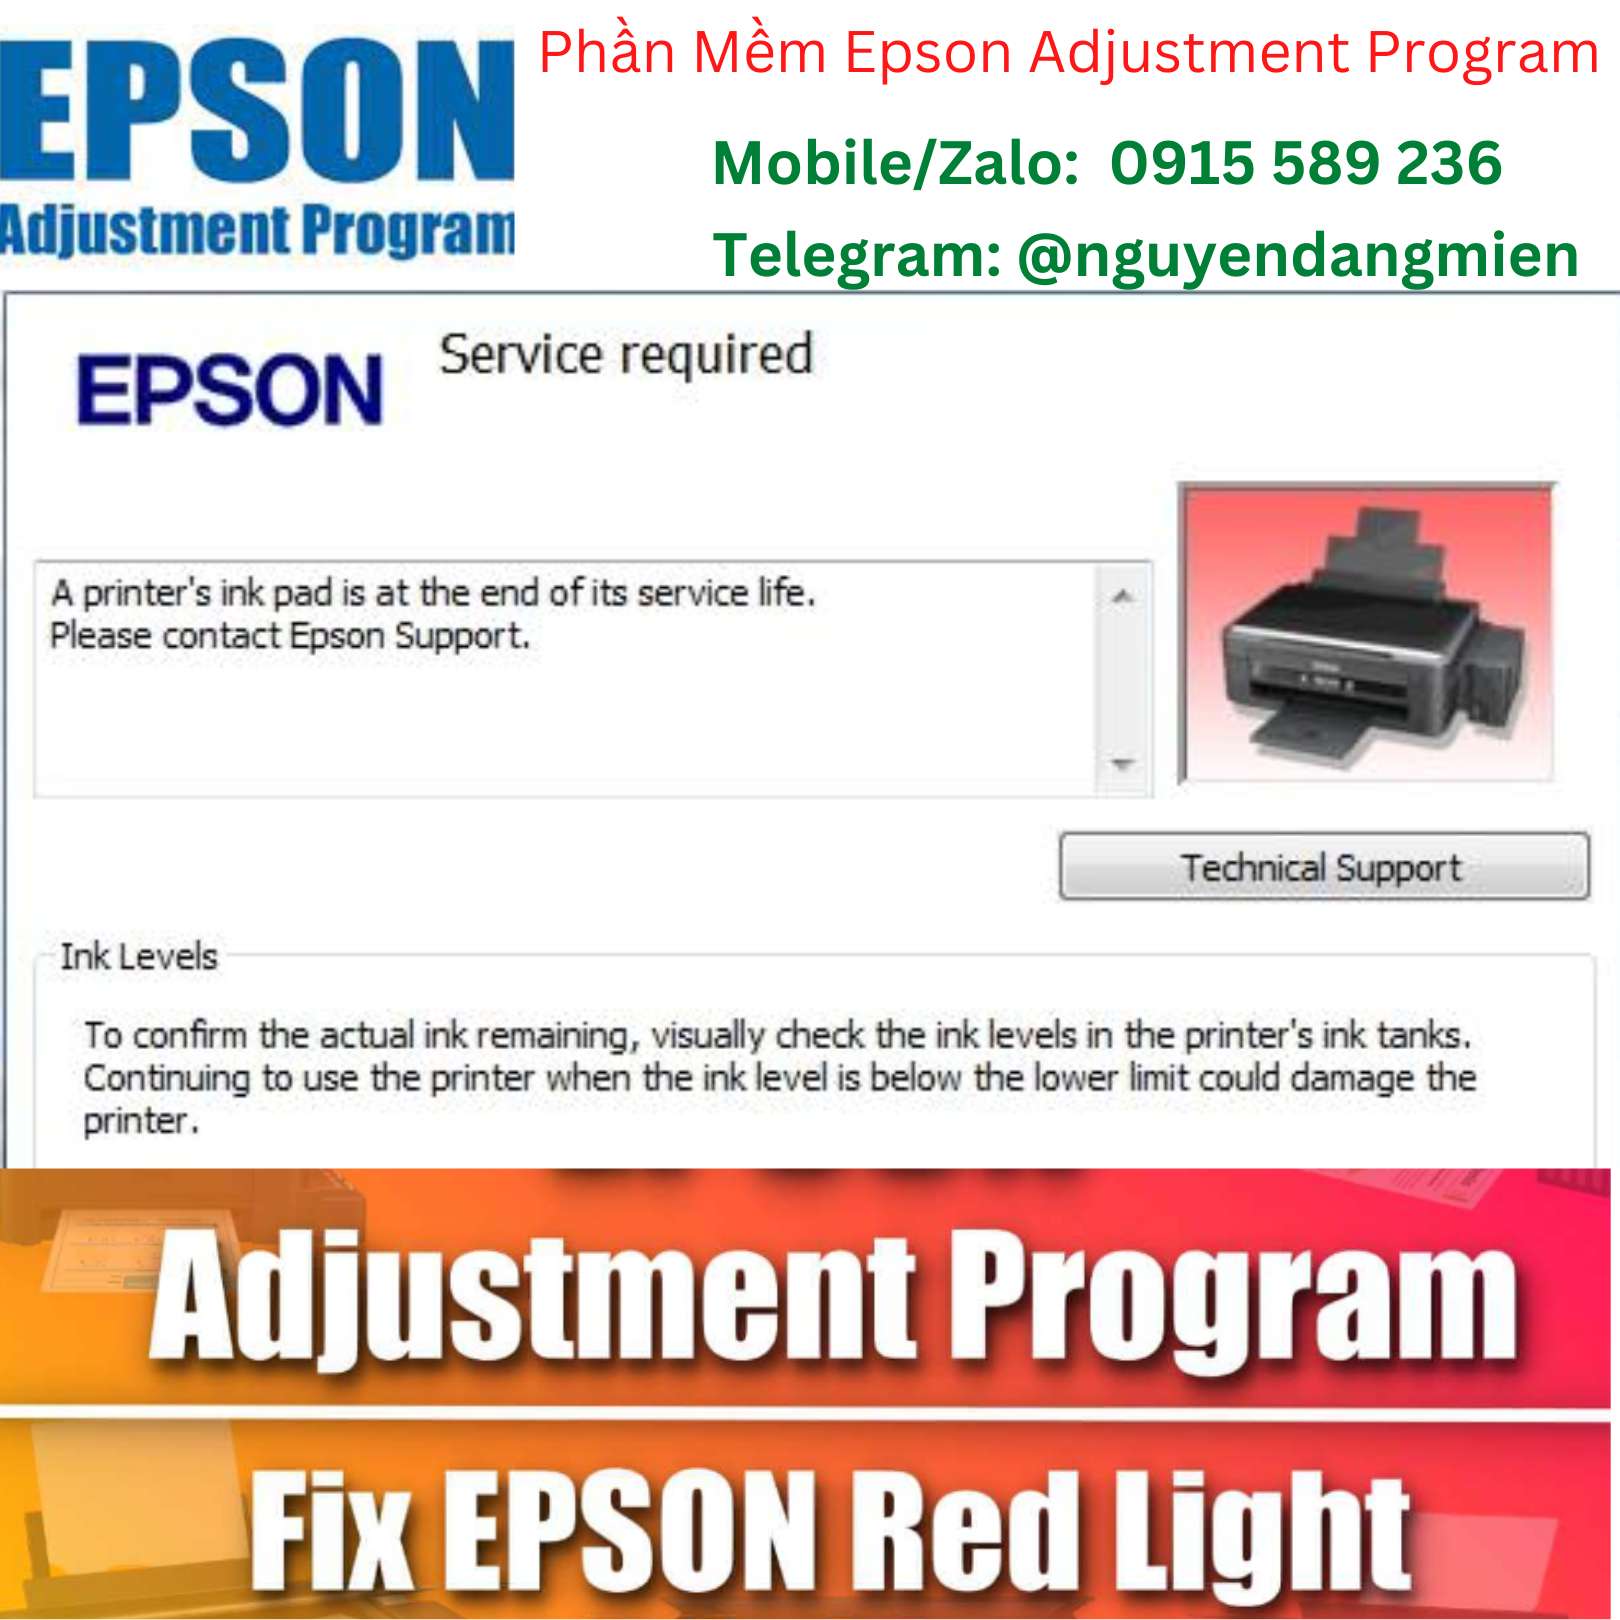 Phần Mềm Epson Adjustment Program